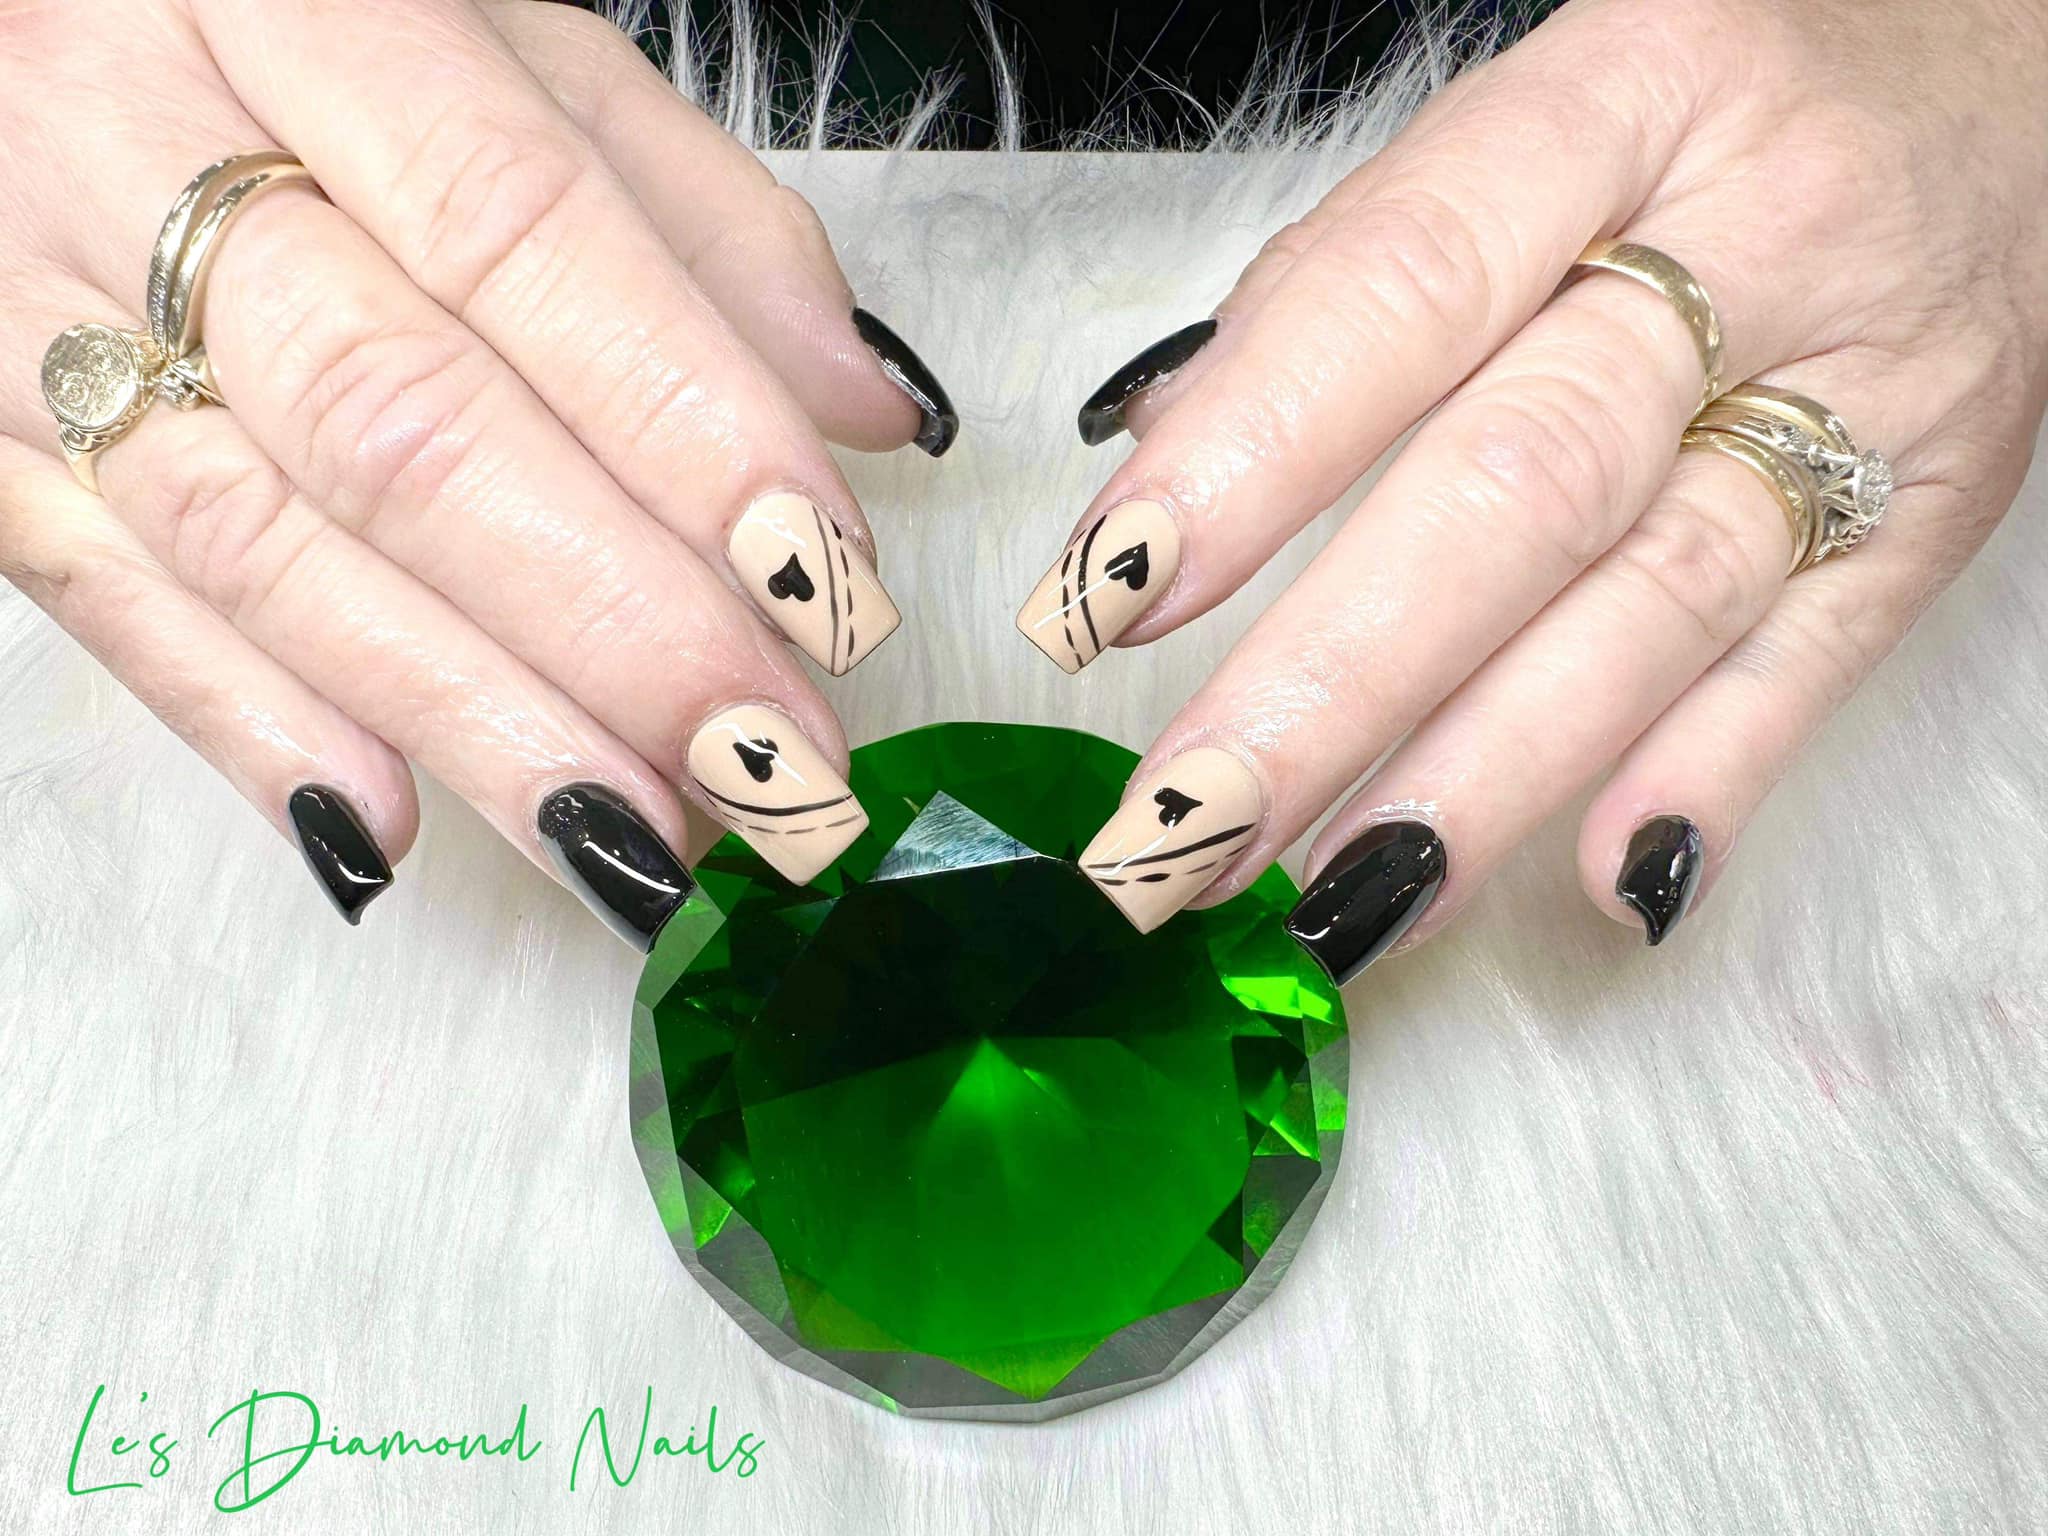 Le's Diamond Nails Salon